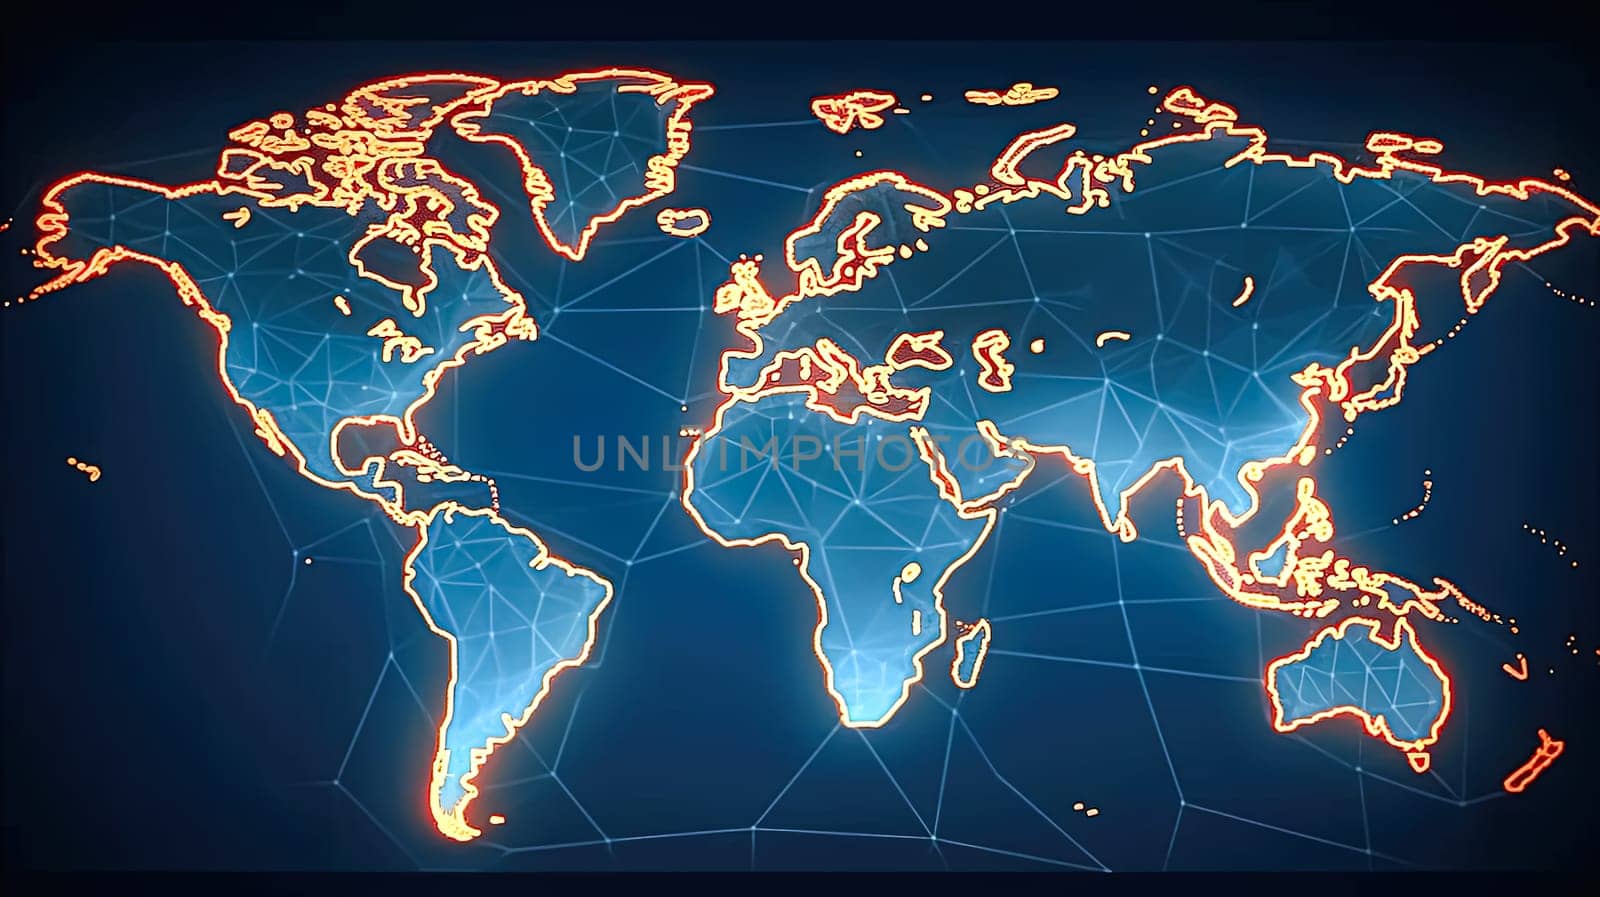 World map illuminated a dynamic illustration by Alla_Morozova93